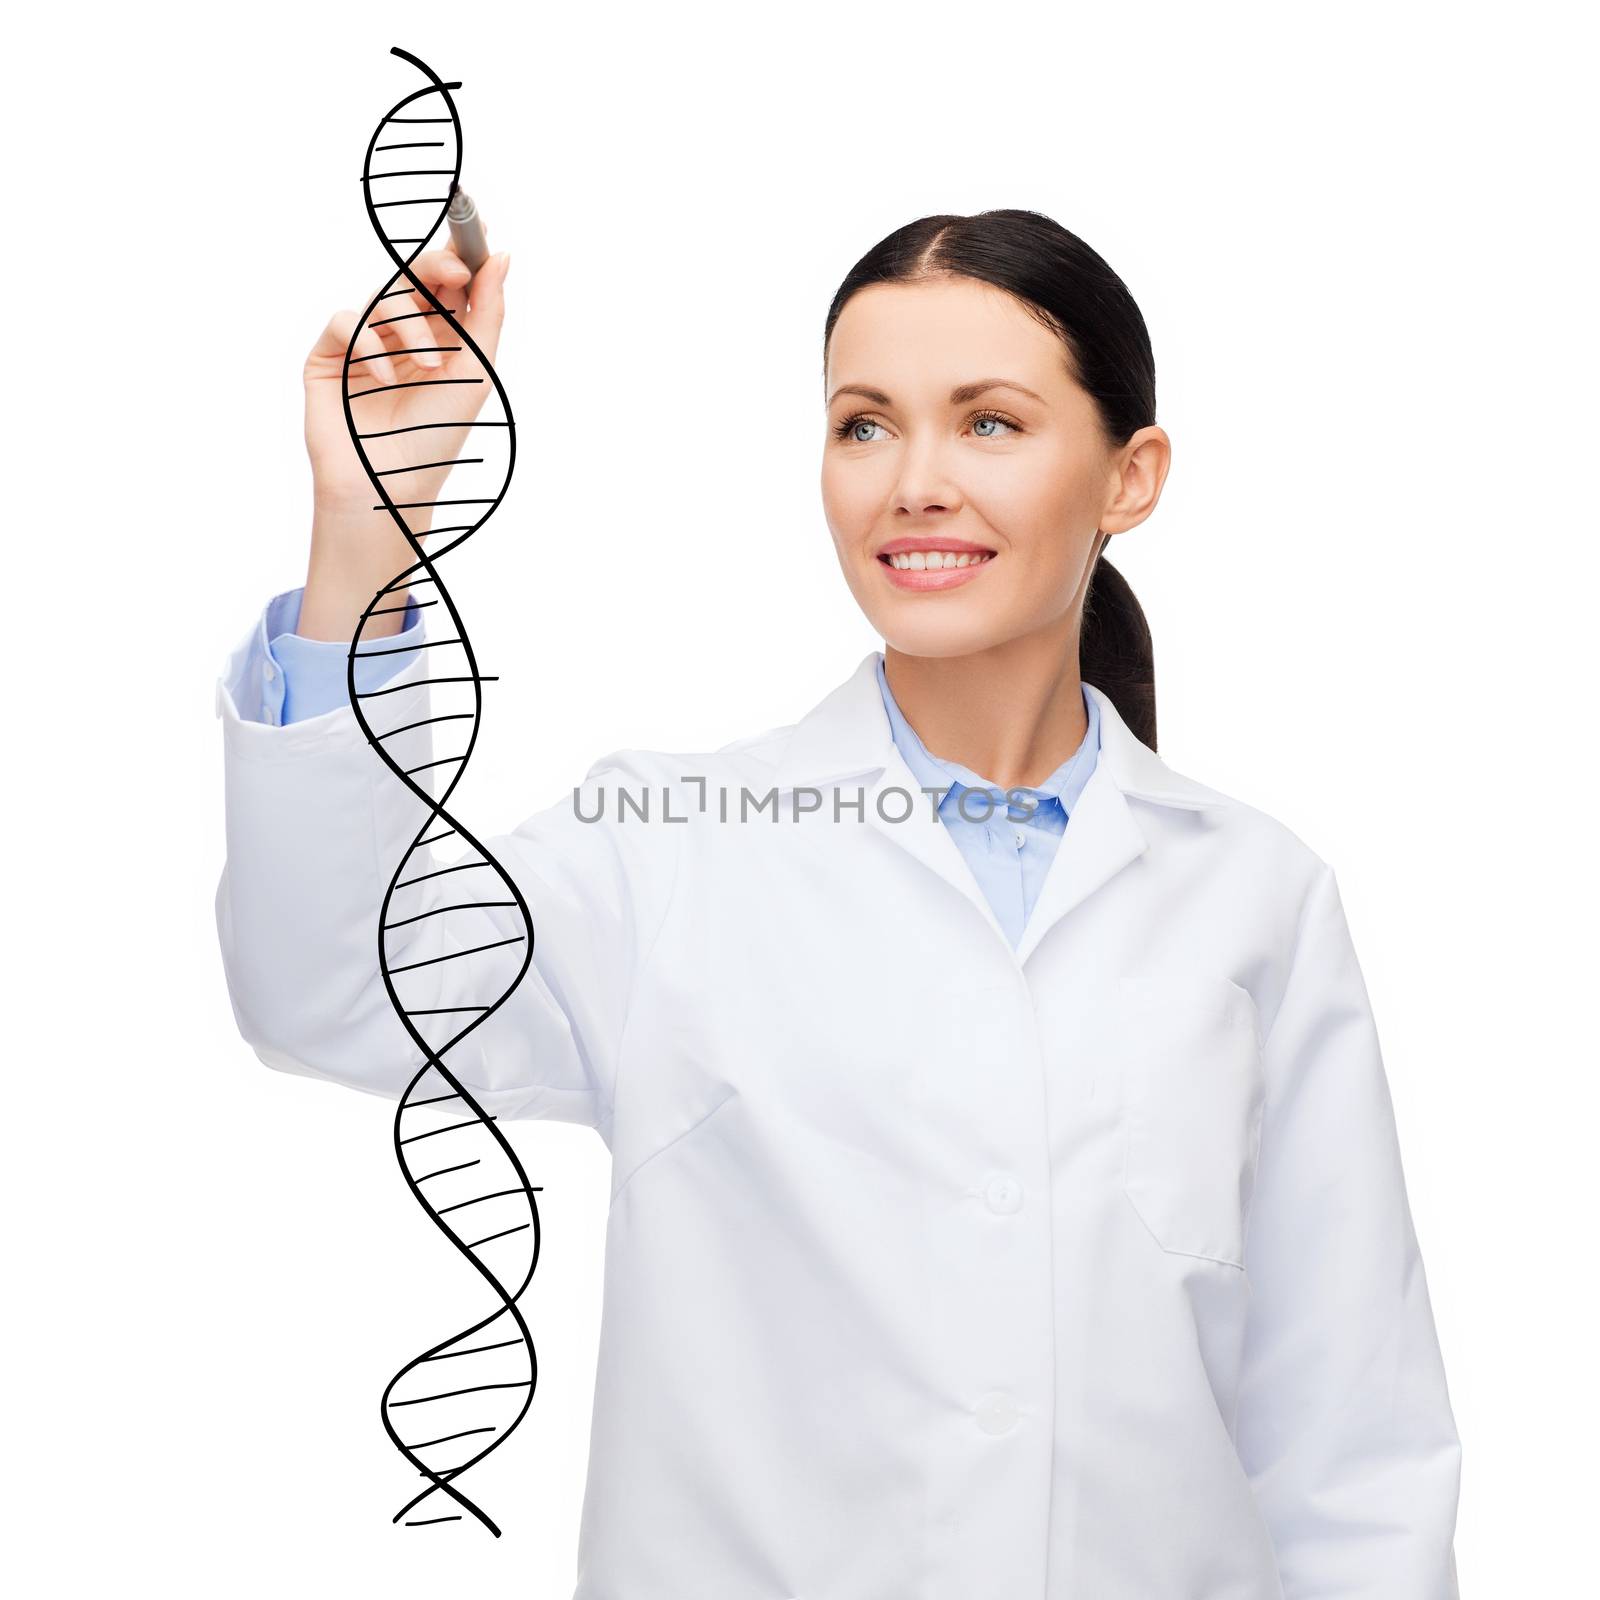 female doctor drawing dna molecule in the air by dolgachov